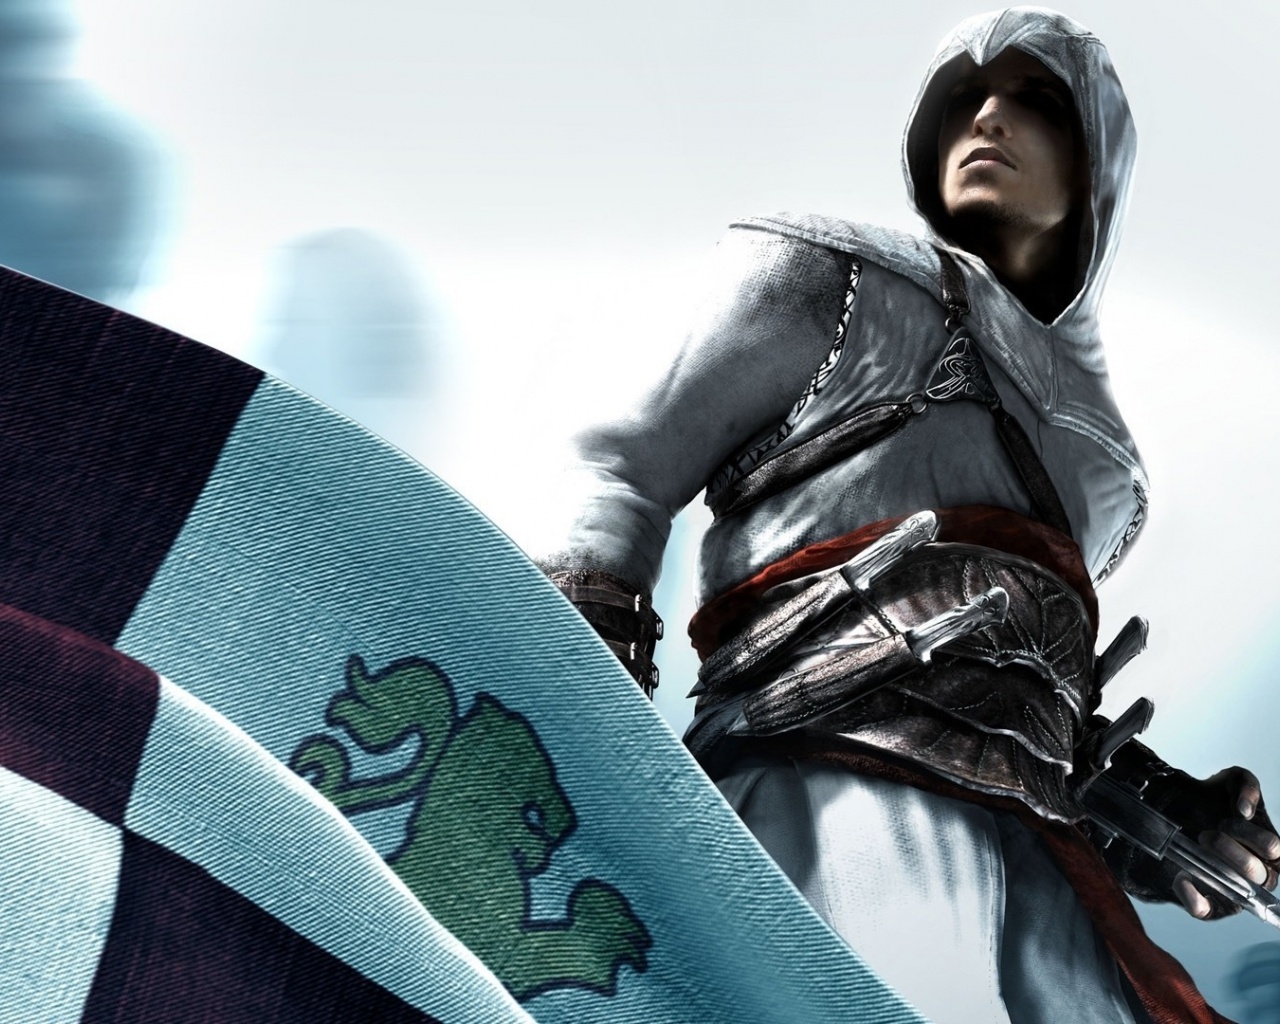 Assassins Creed Flag Lion Knife